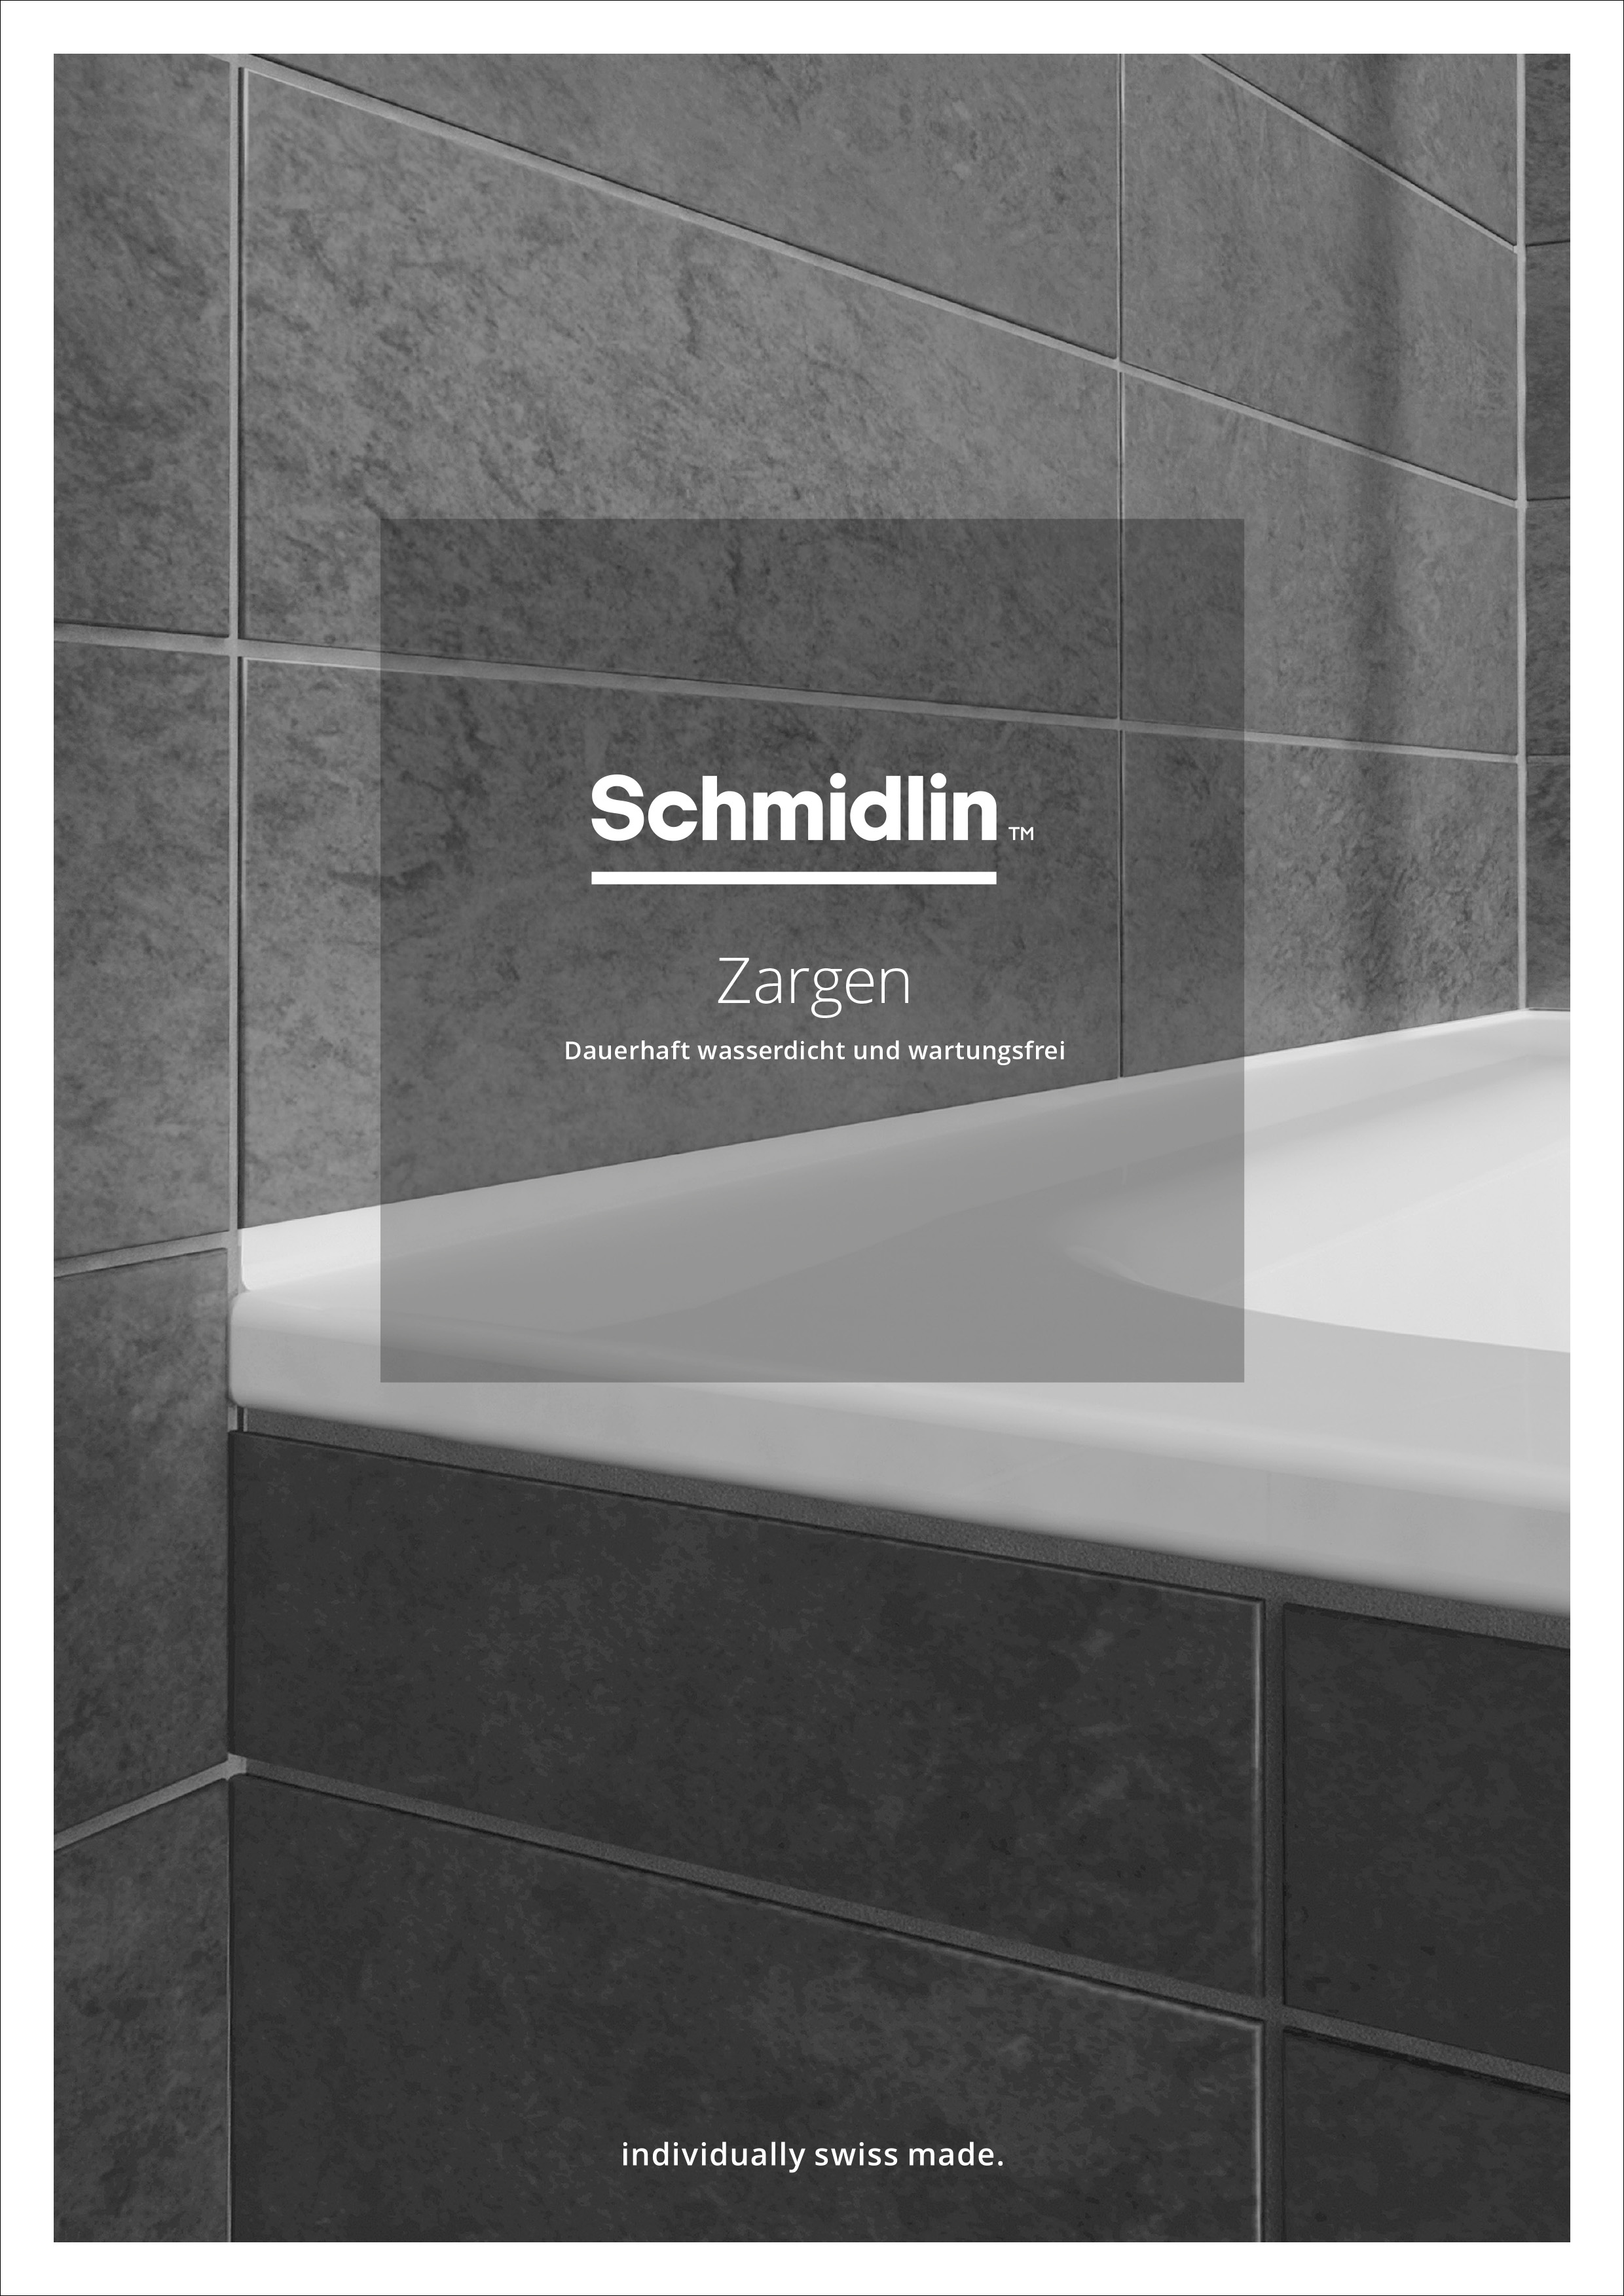 Schmidlin_Zargen 2021_web_DE-1.jpg